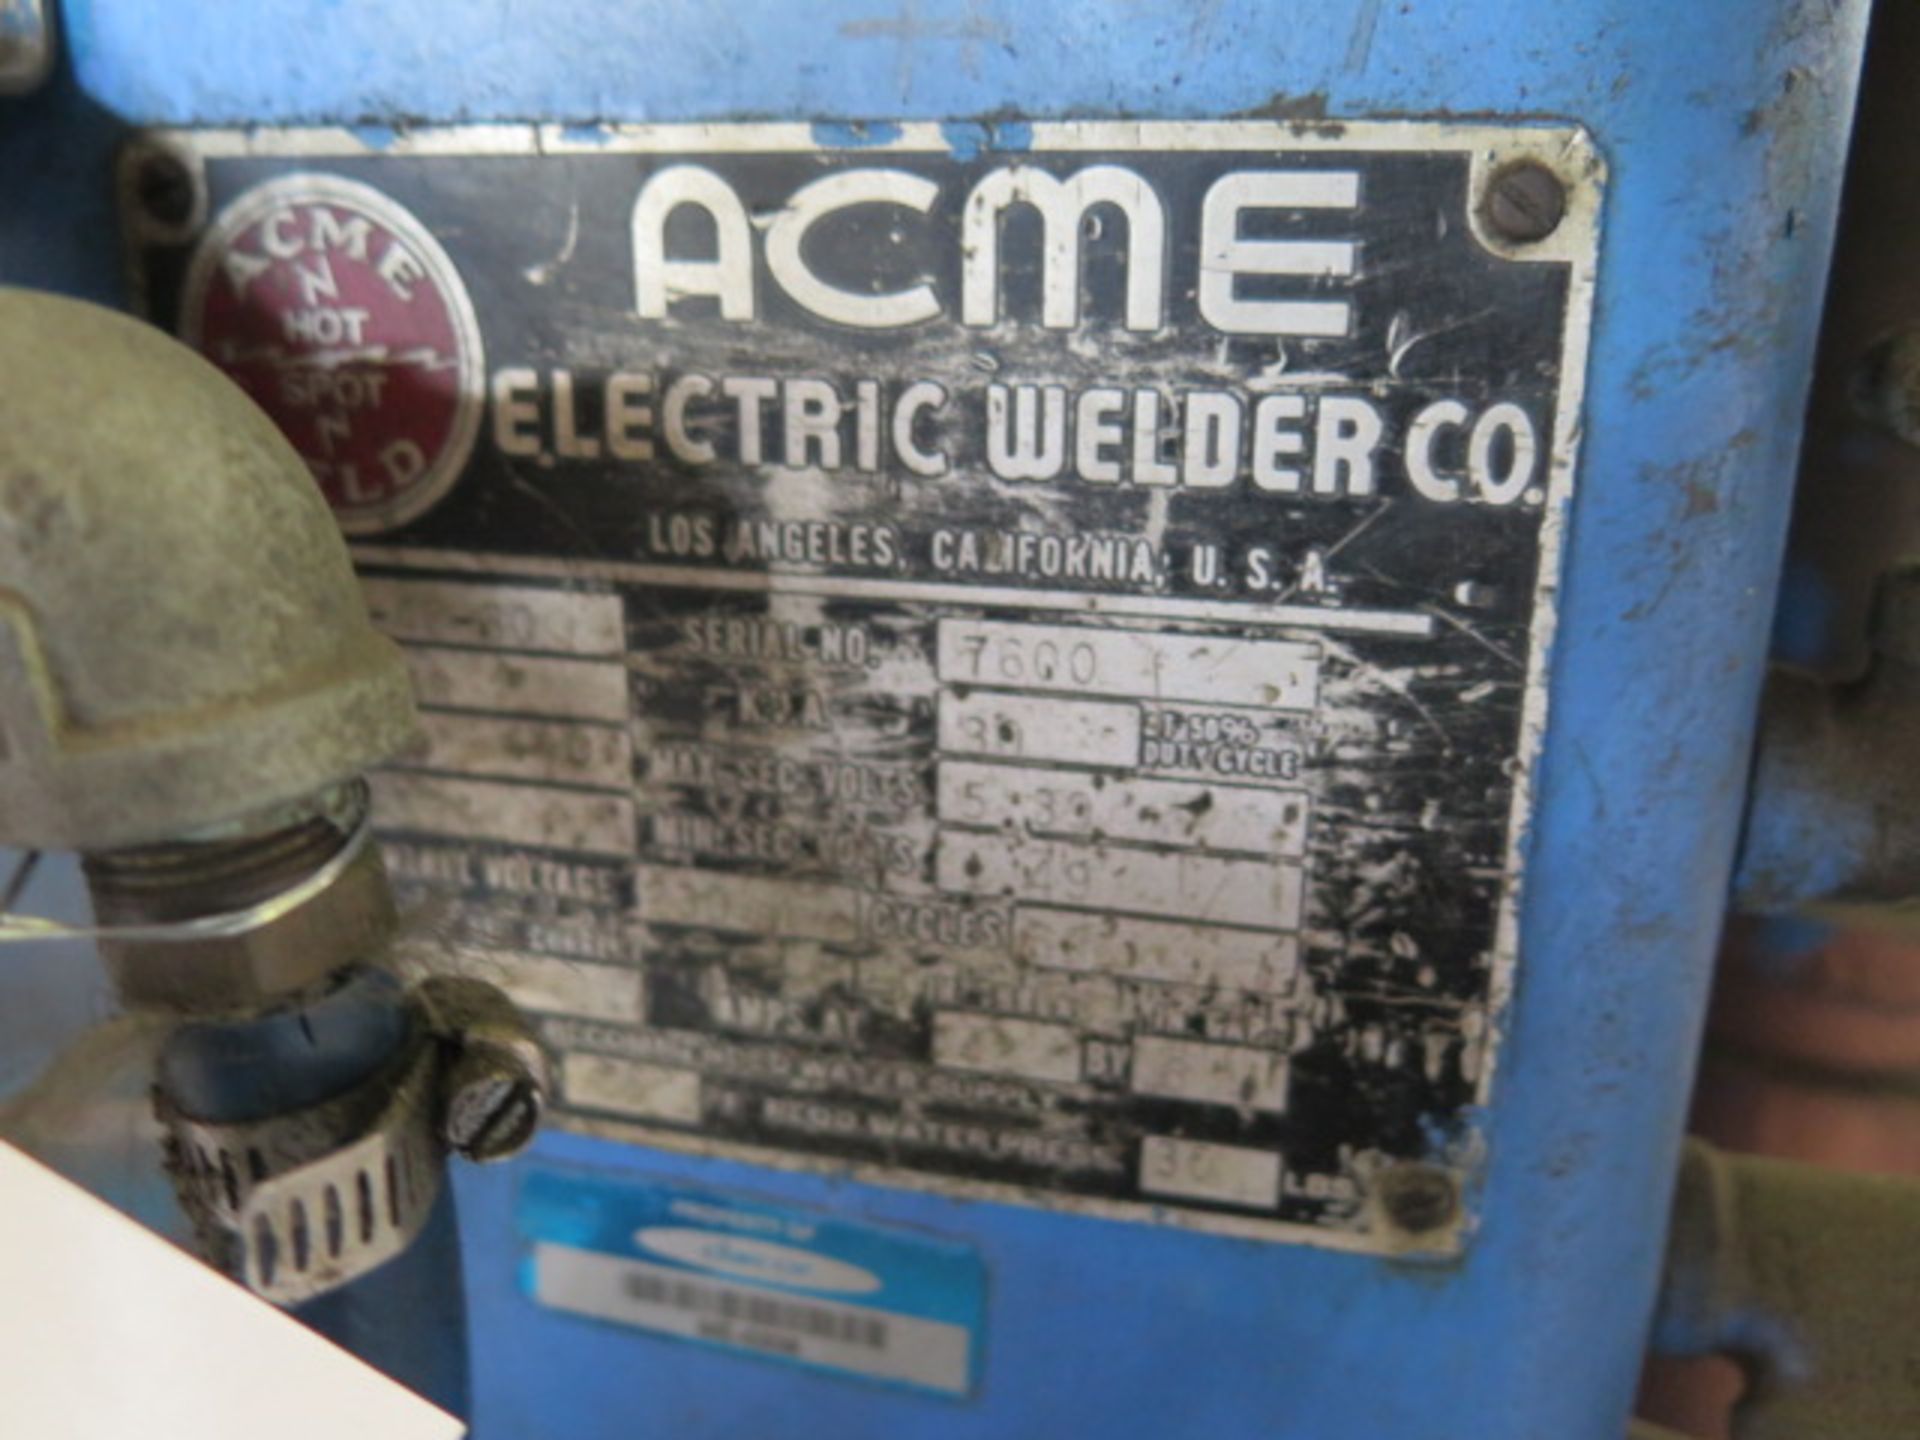 Acme Type 2-24-30 30kVA Spot Welder s/n 7600 w/ iii Resistance Welding Controls (SOLD AS-IS - NO WA - Image 11 of 11